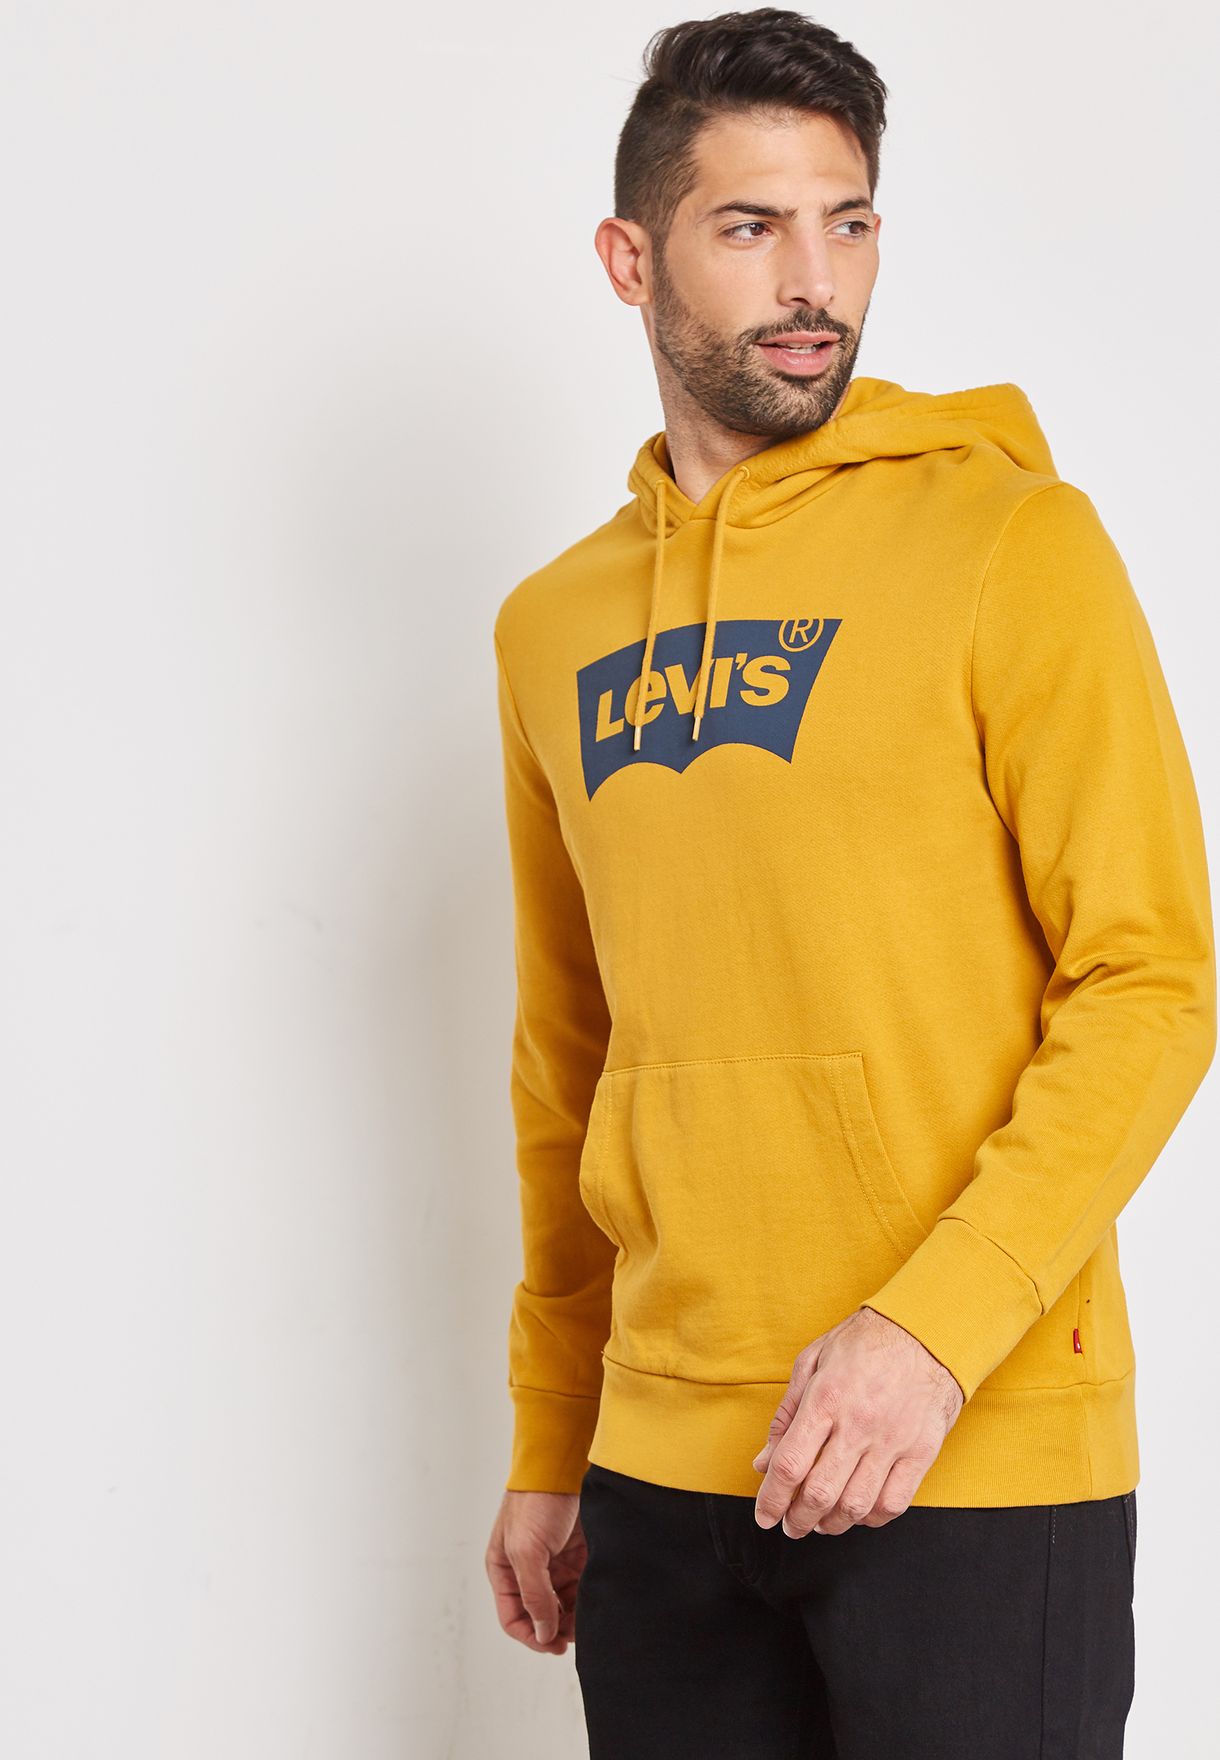 Levi's Sweatshirt Yellow Deals, SAVE 57% 